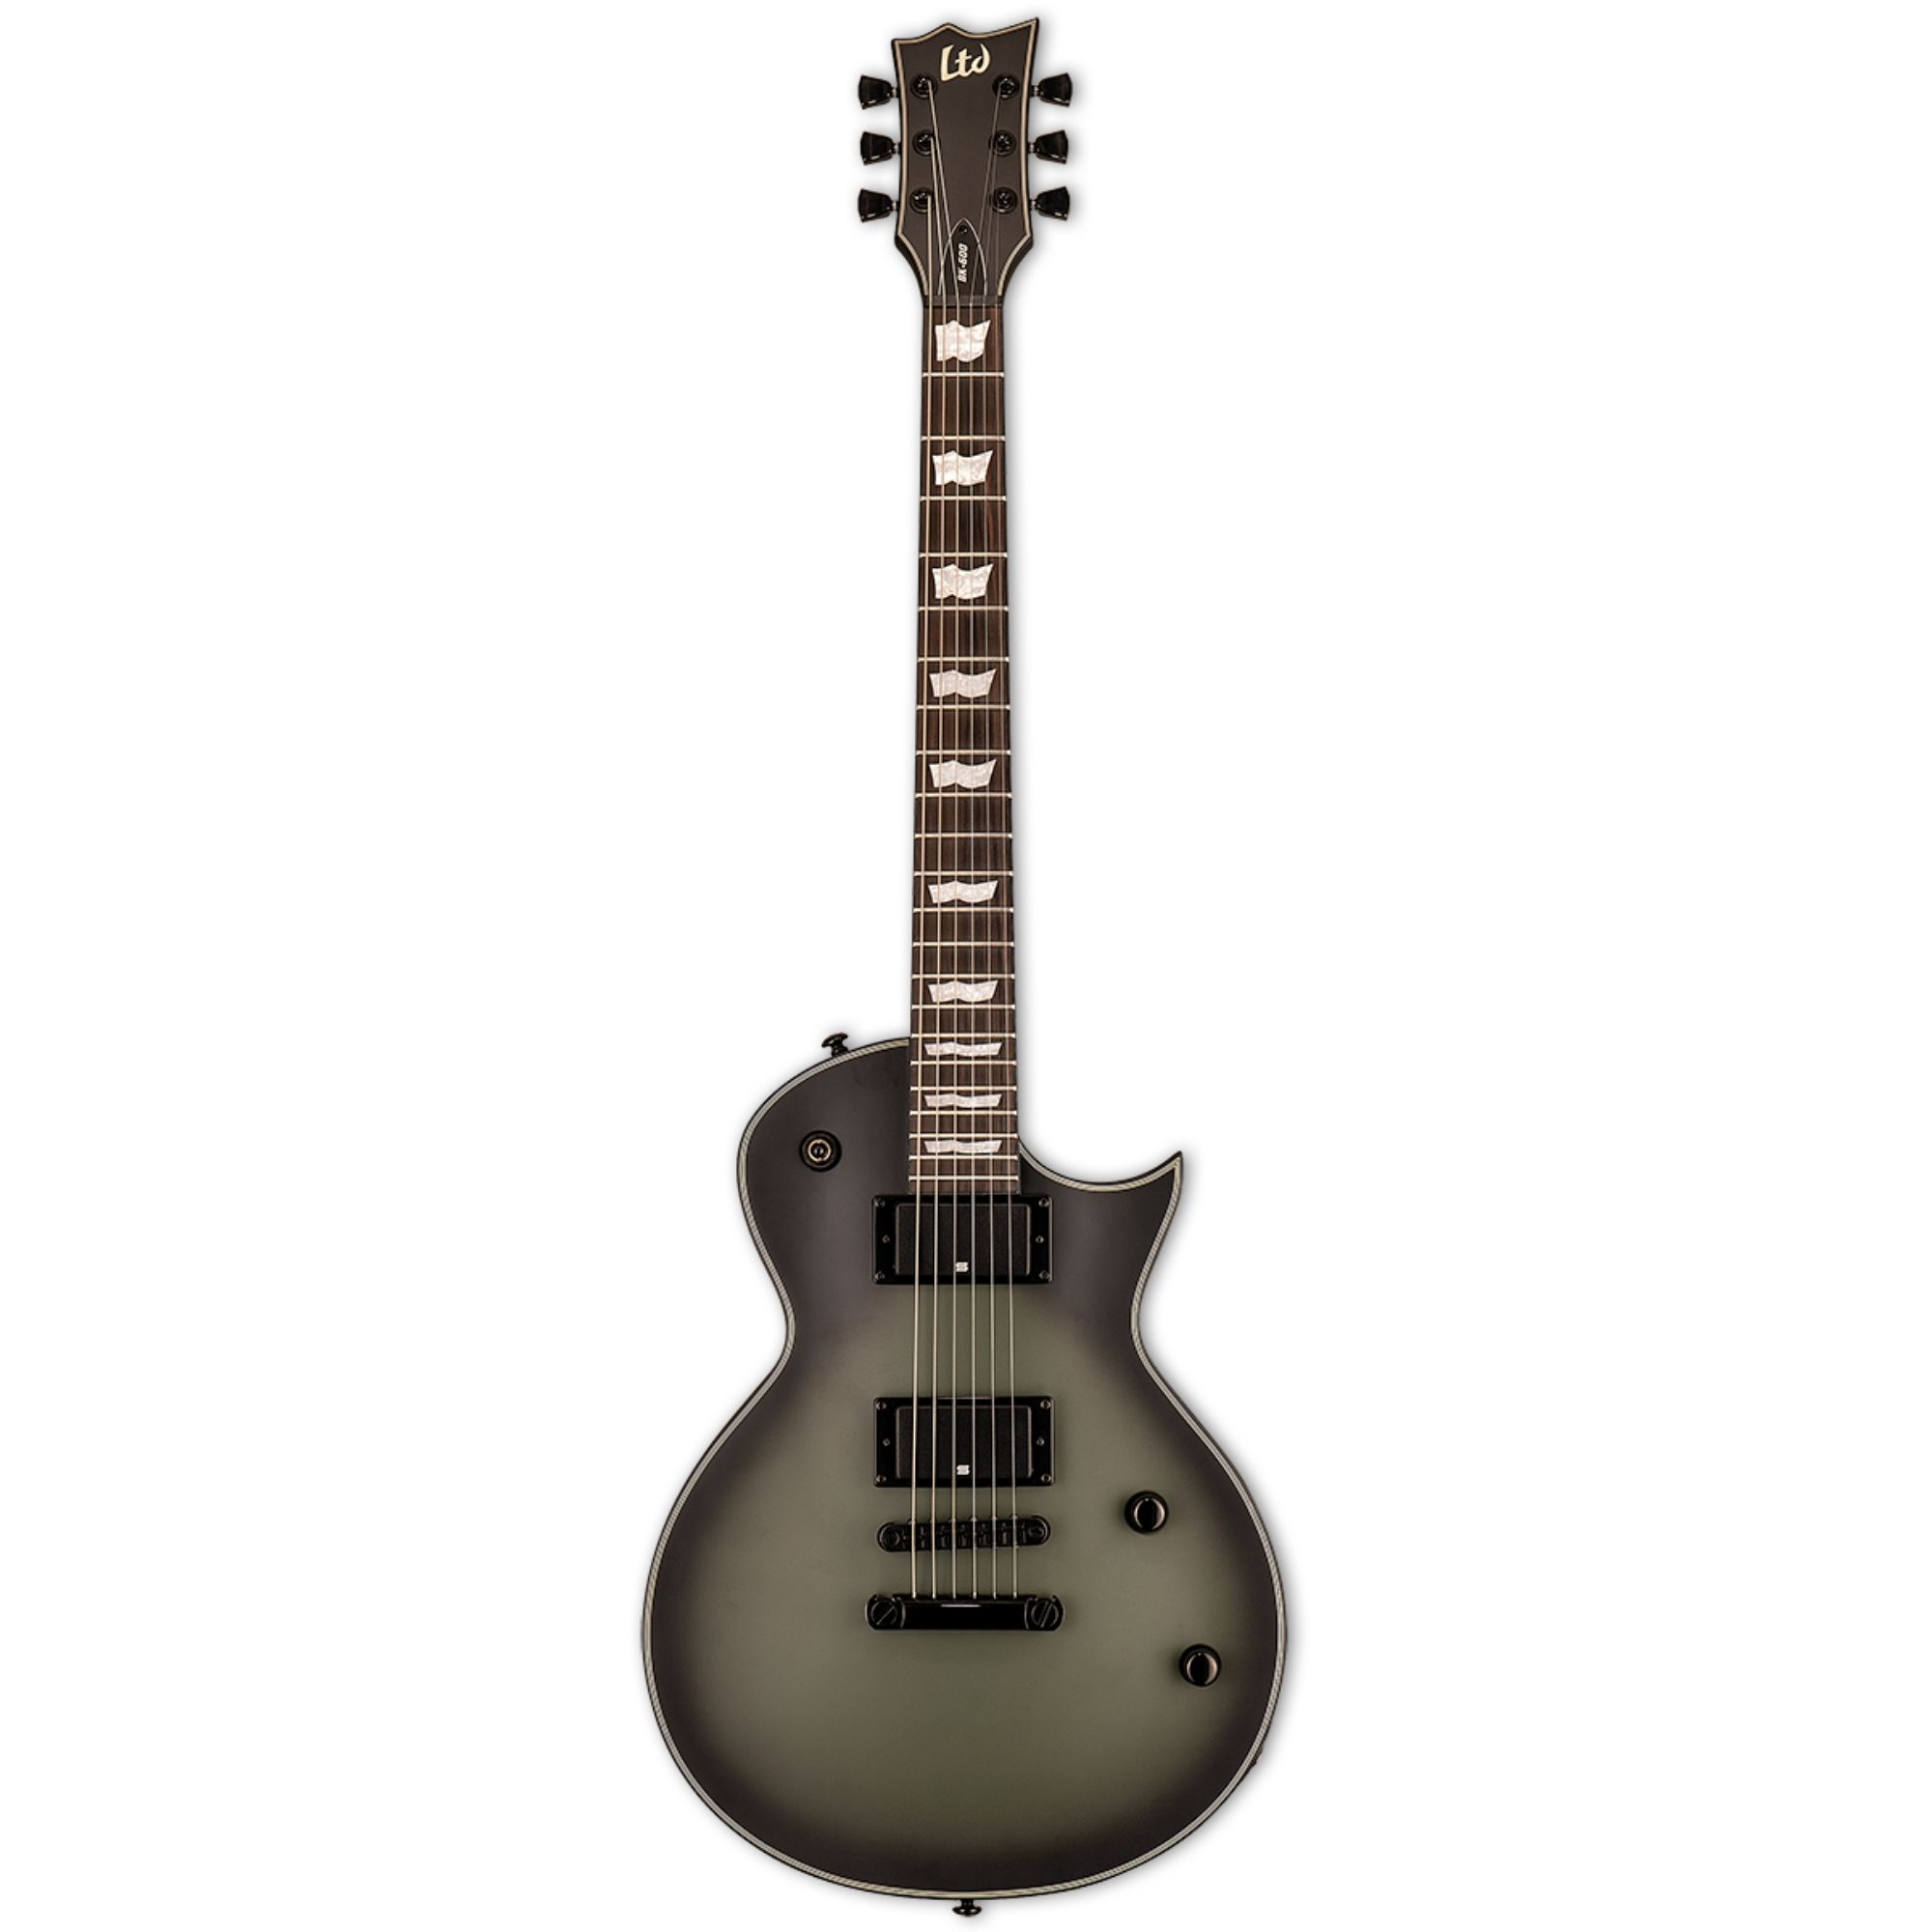 Buy ESP BK600 electric guitar online in India